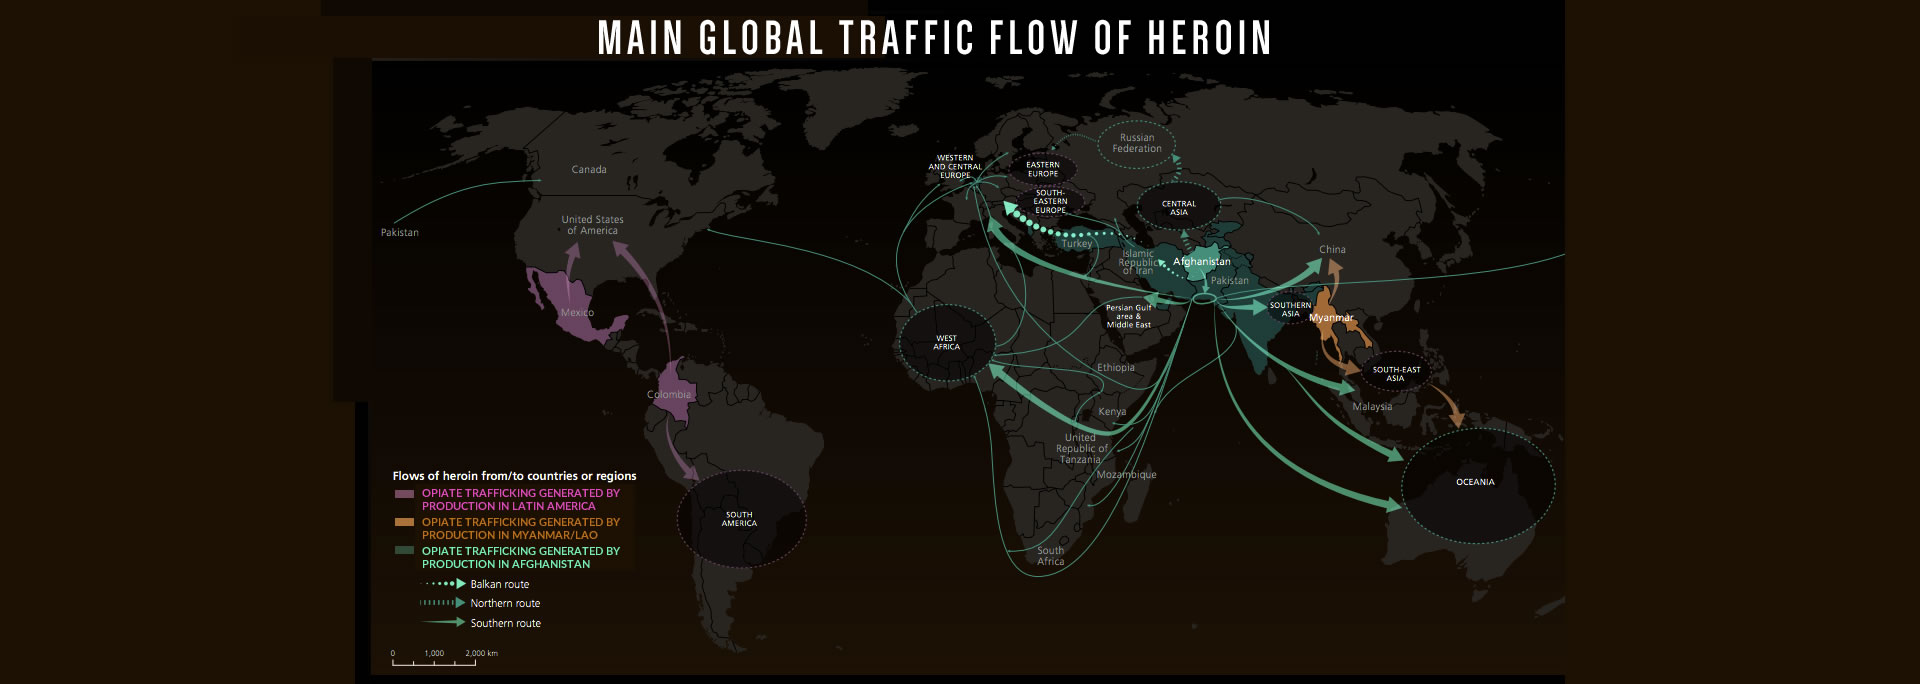 global-trafficking-flow-opiates1920